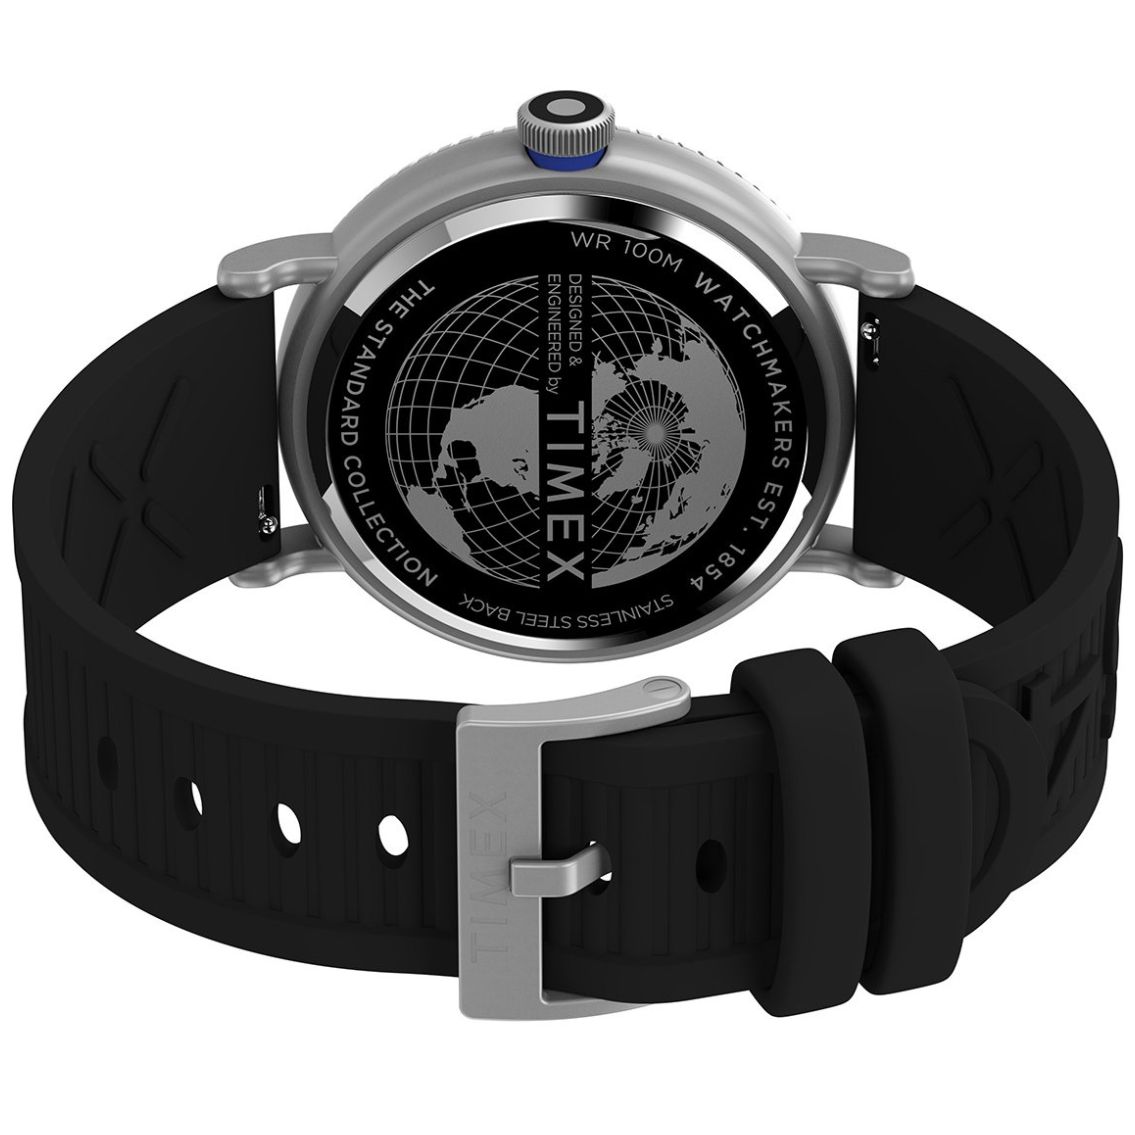 Reloj Timex TW5M06800 para Hombre Reloj de tamaño completo, Estándar.